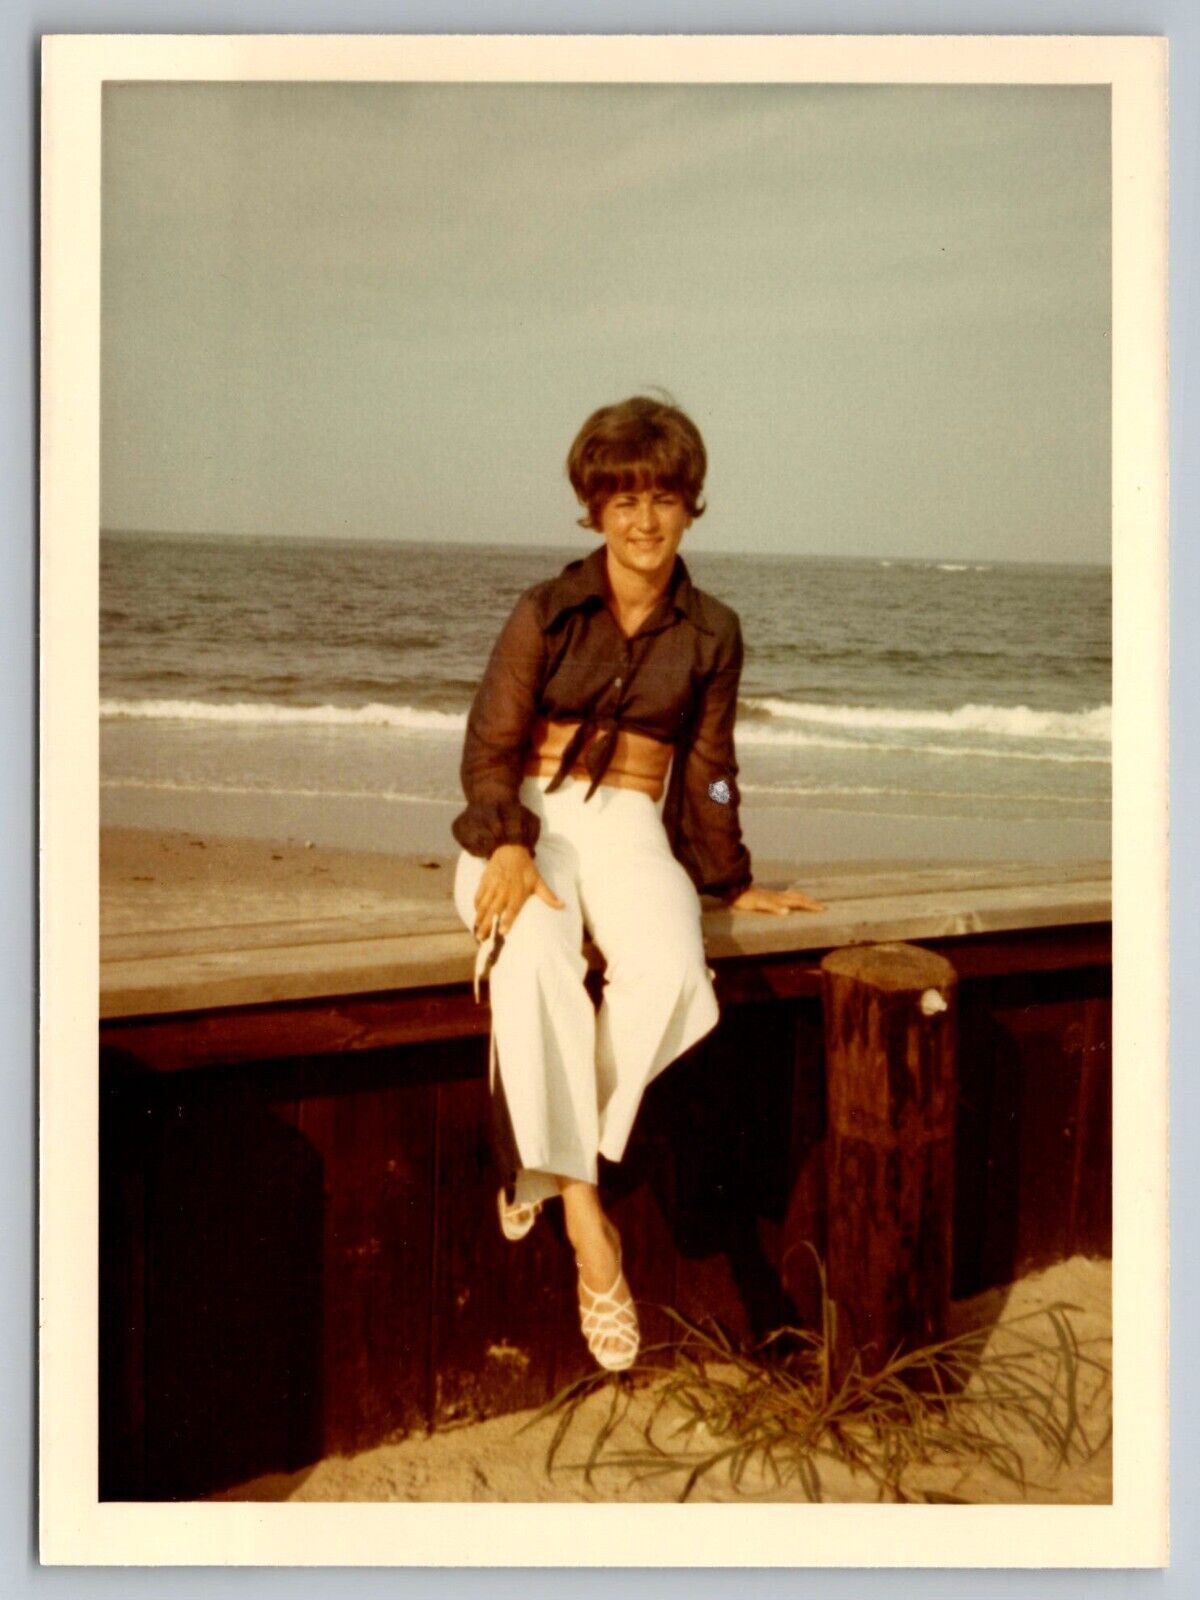 Pretty girl at beach Vintage Snapshot Photo 1970